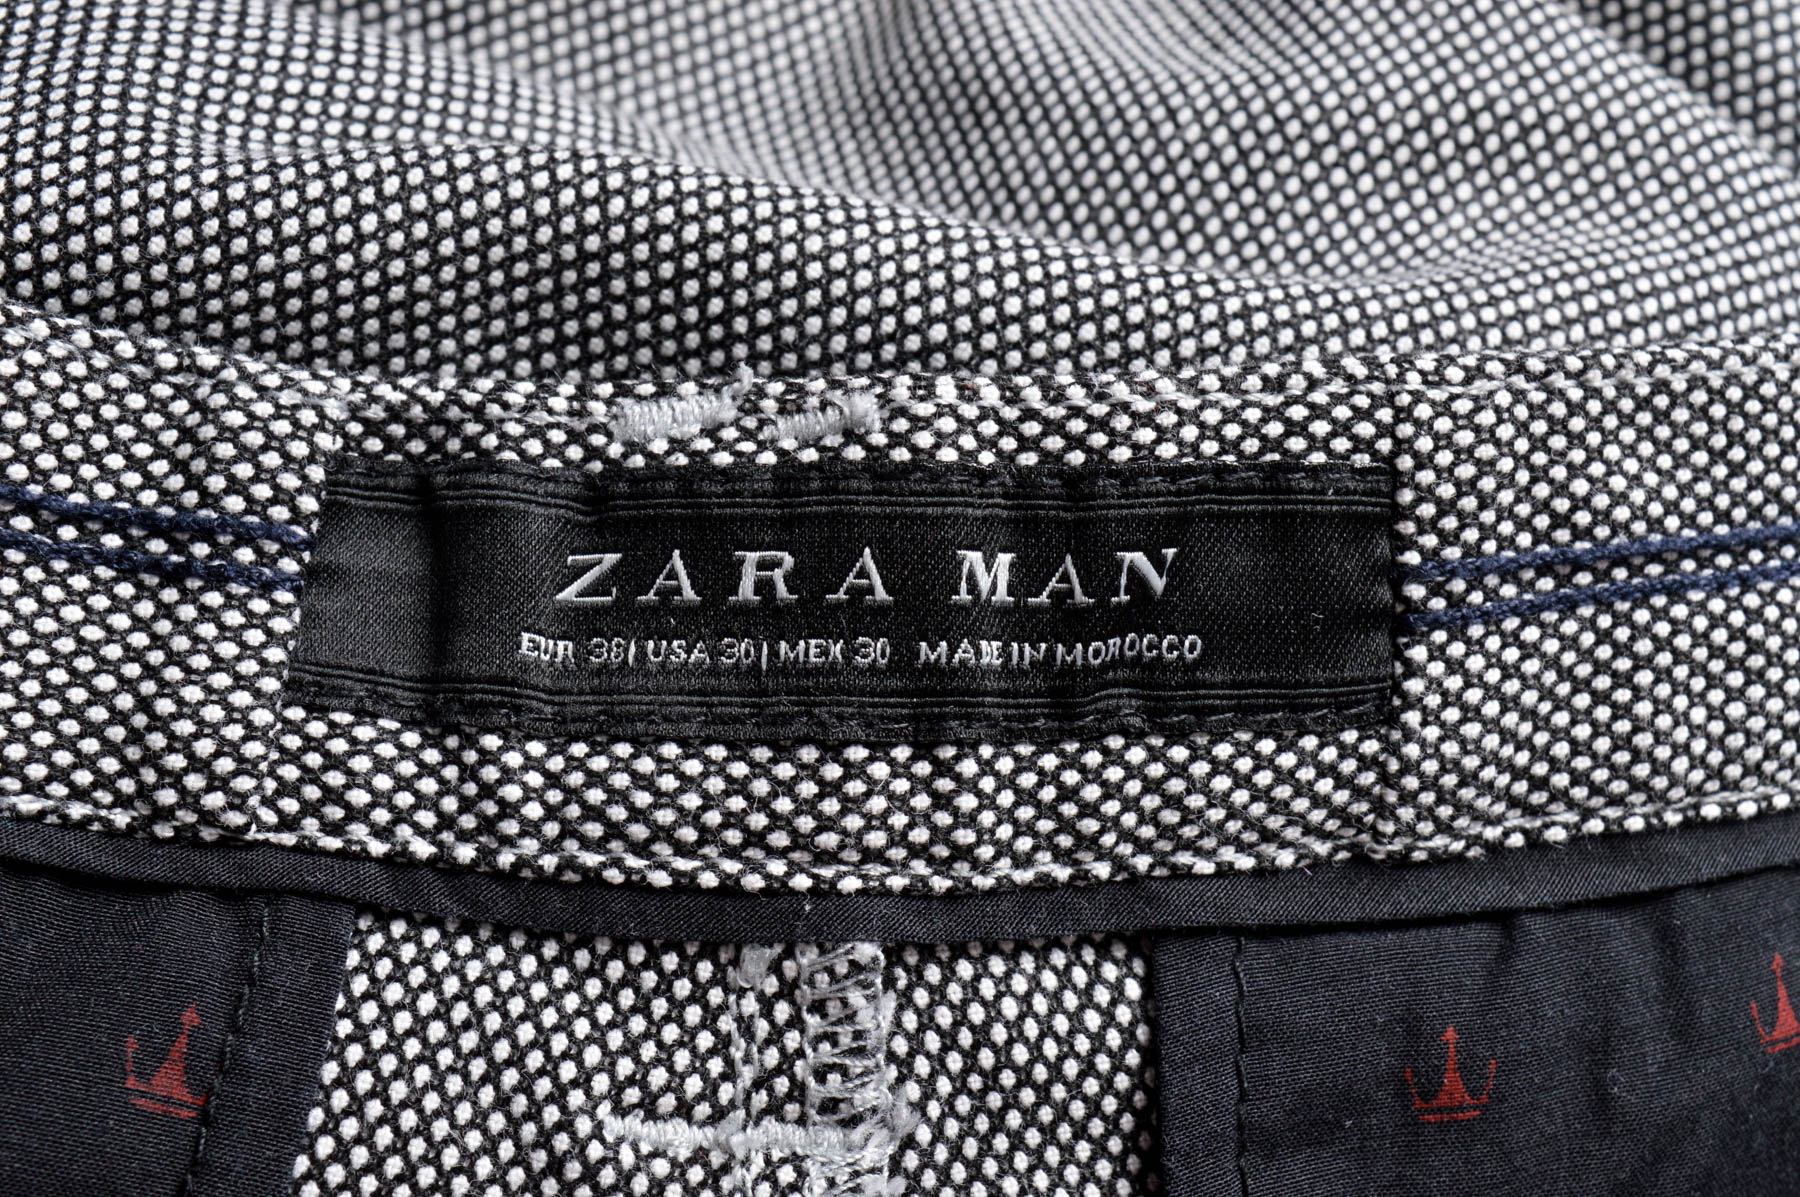 Men's trousers - ZARA MAN - 2